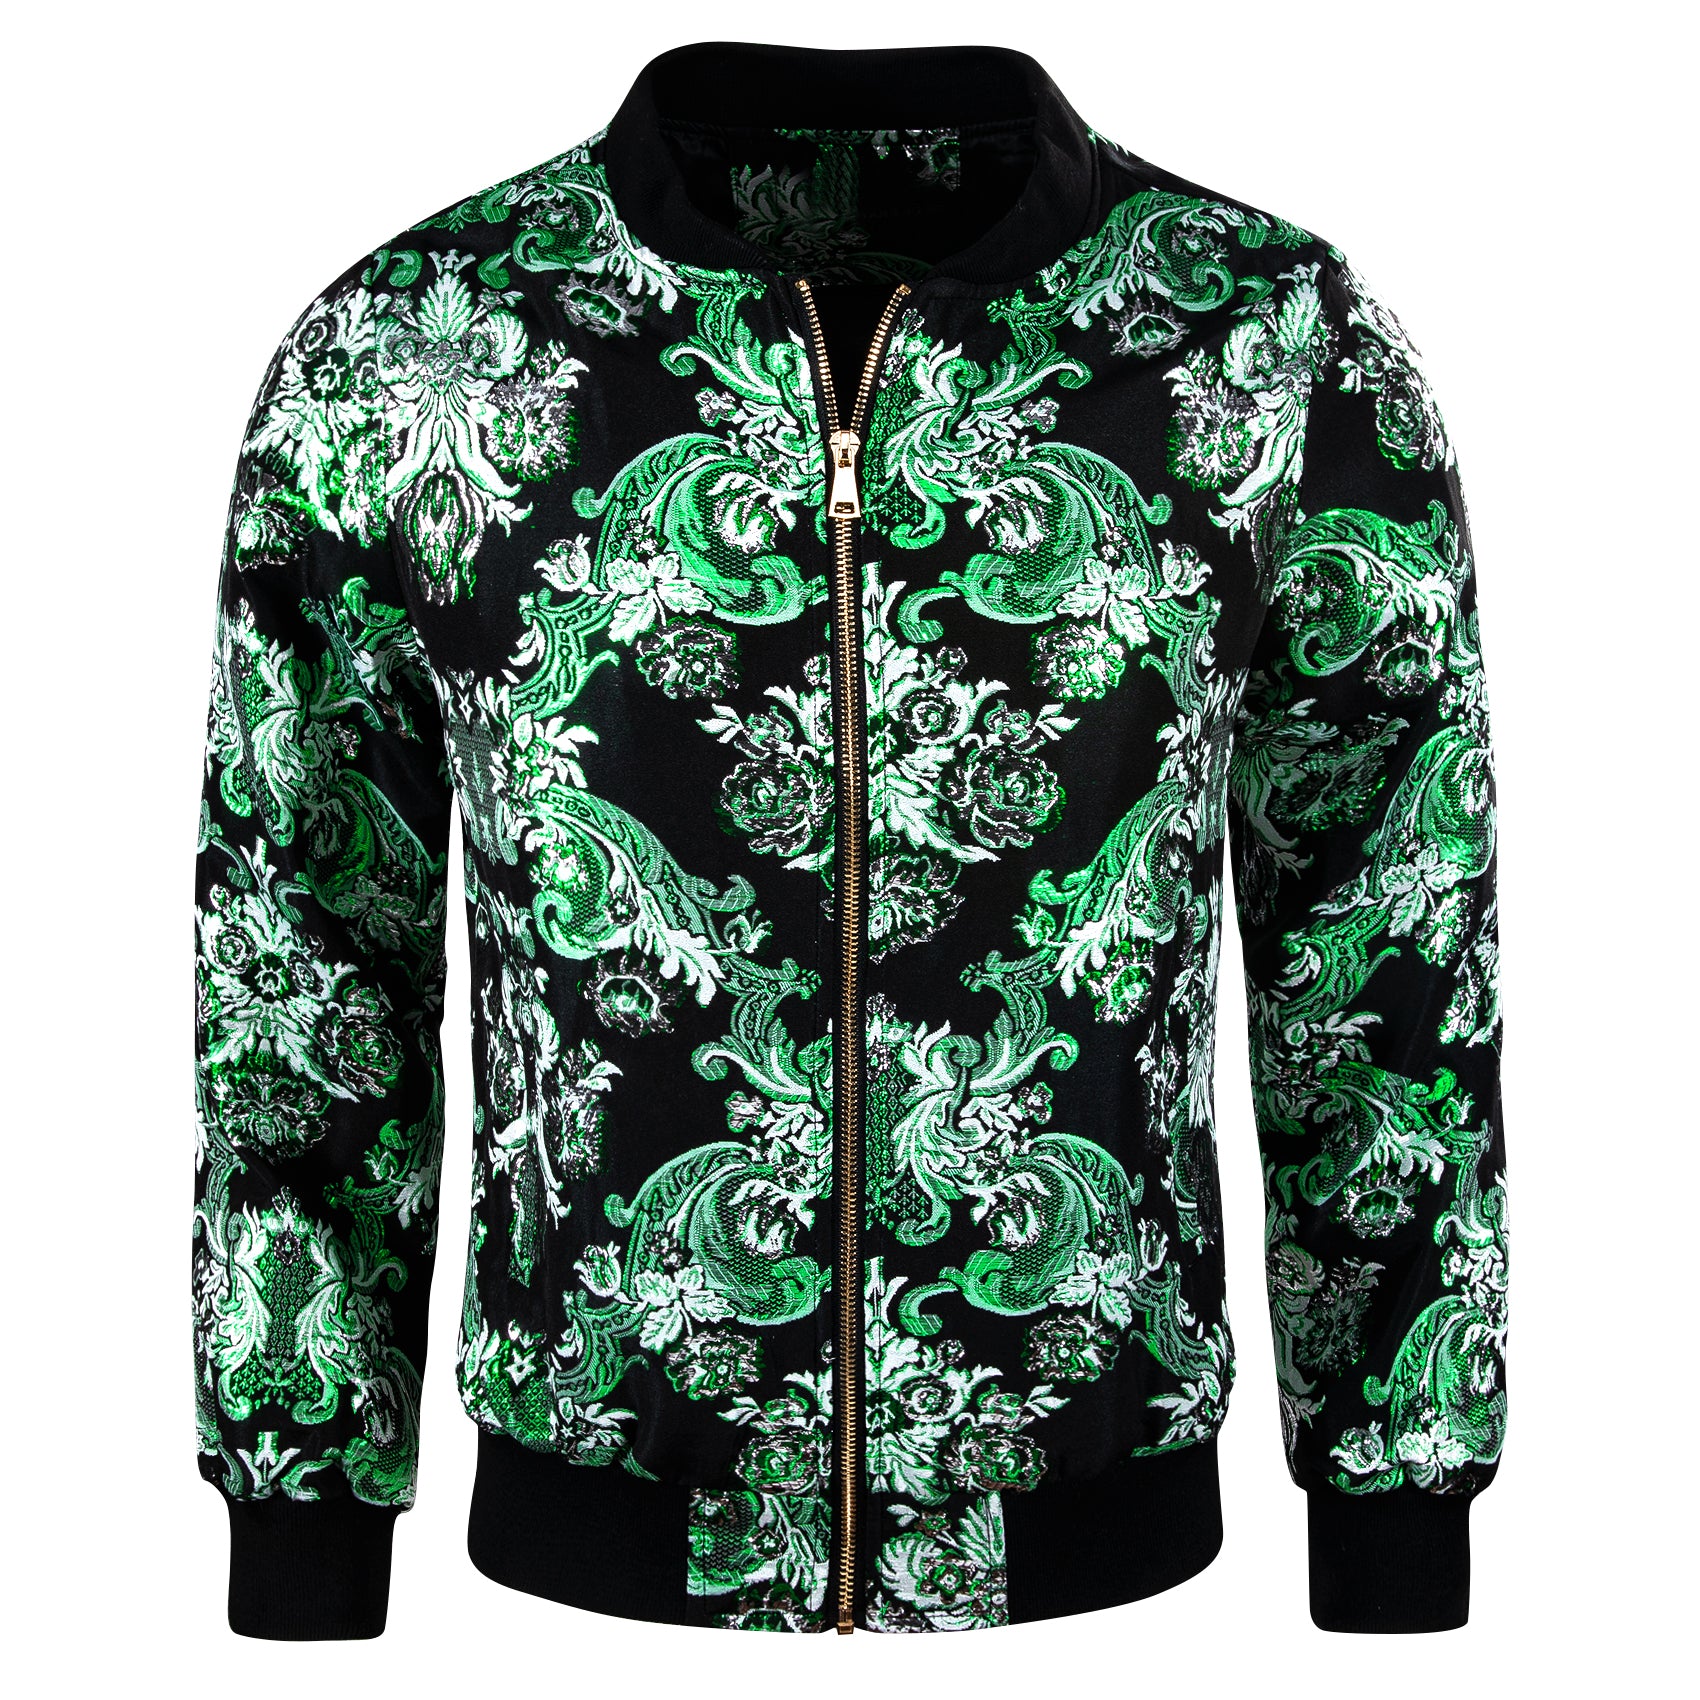 Barry.wang Zipper Jacket Men's Green White Floral Jacquard Paisley Jacket